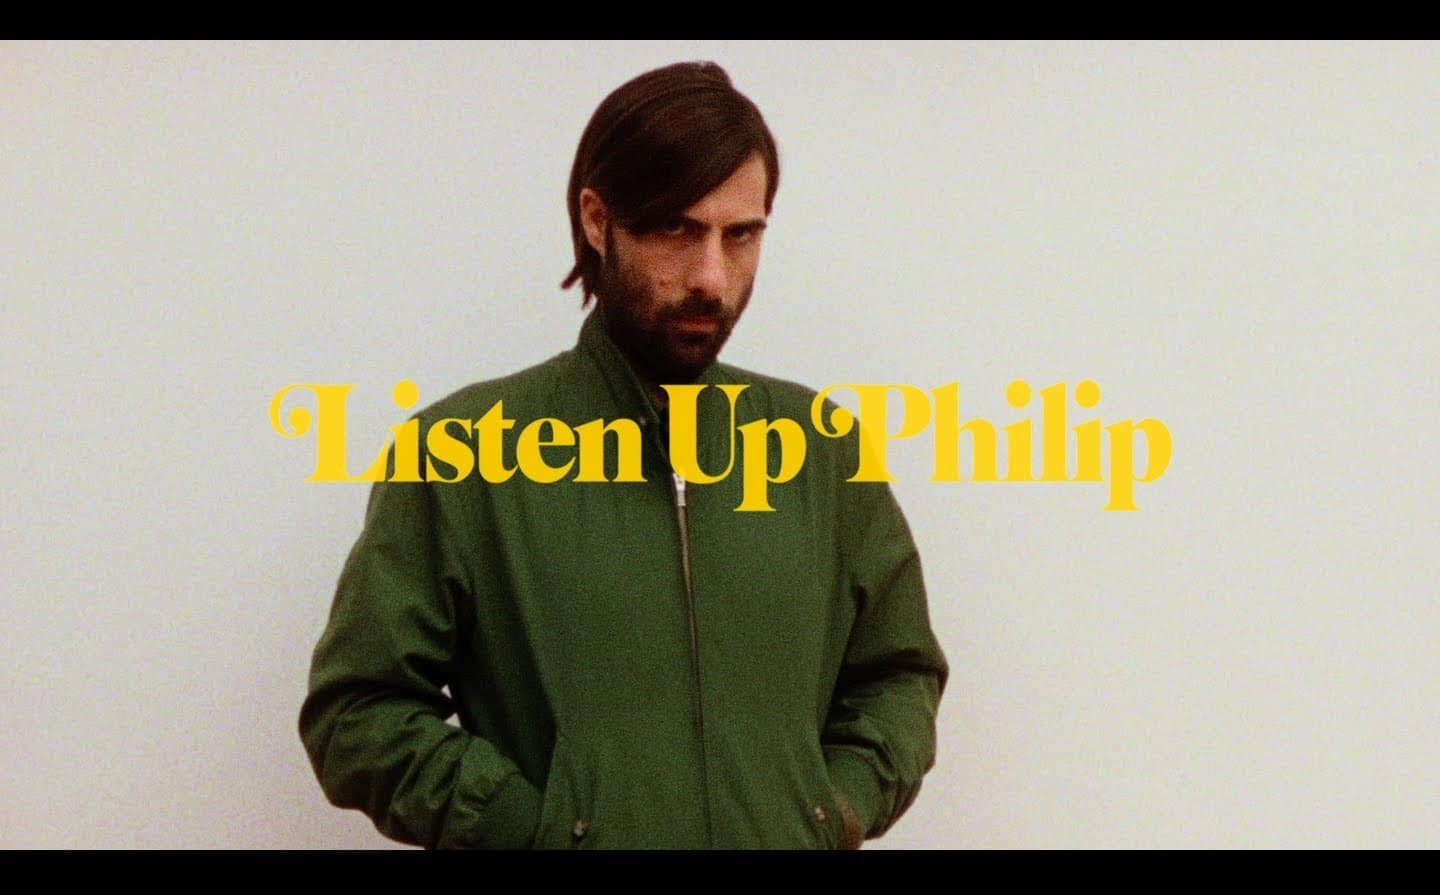 Listen Up Philip : Film Review